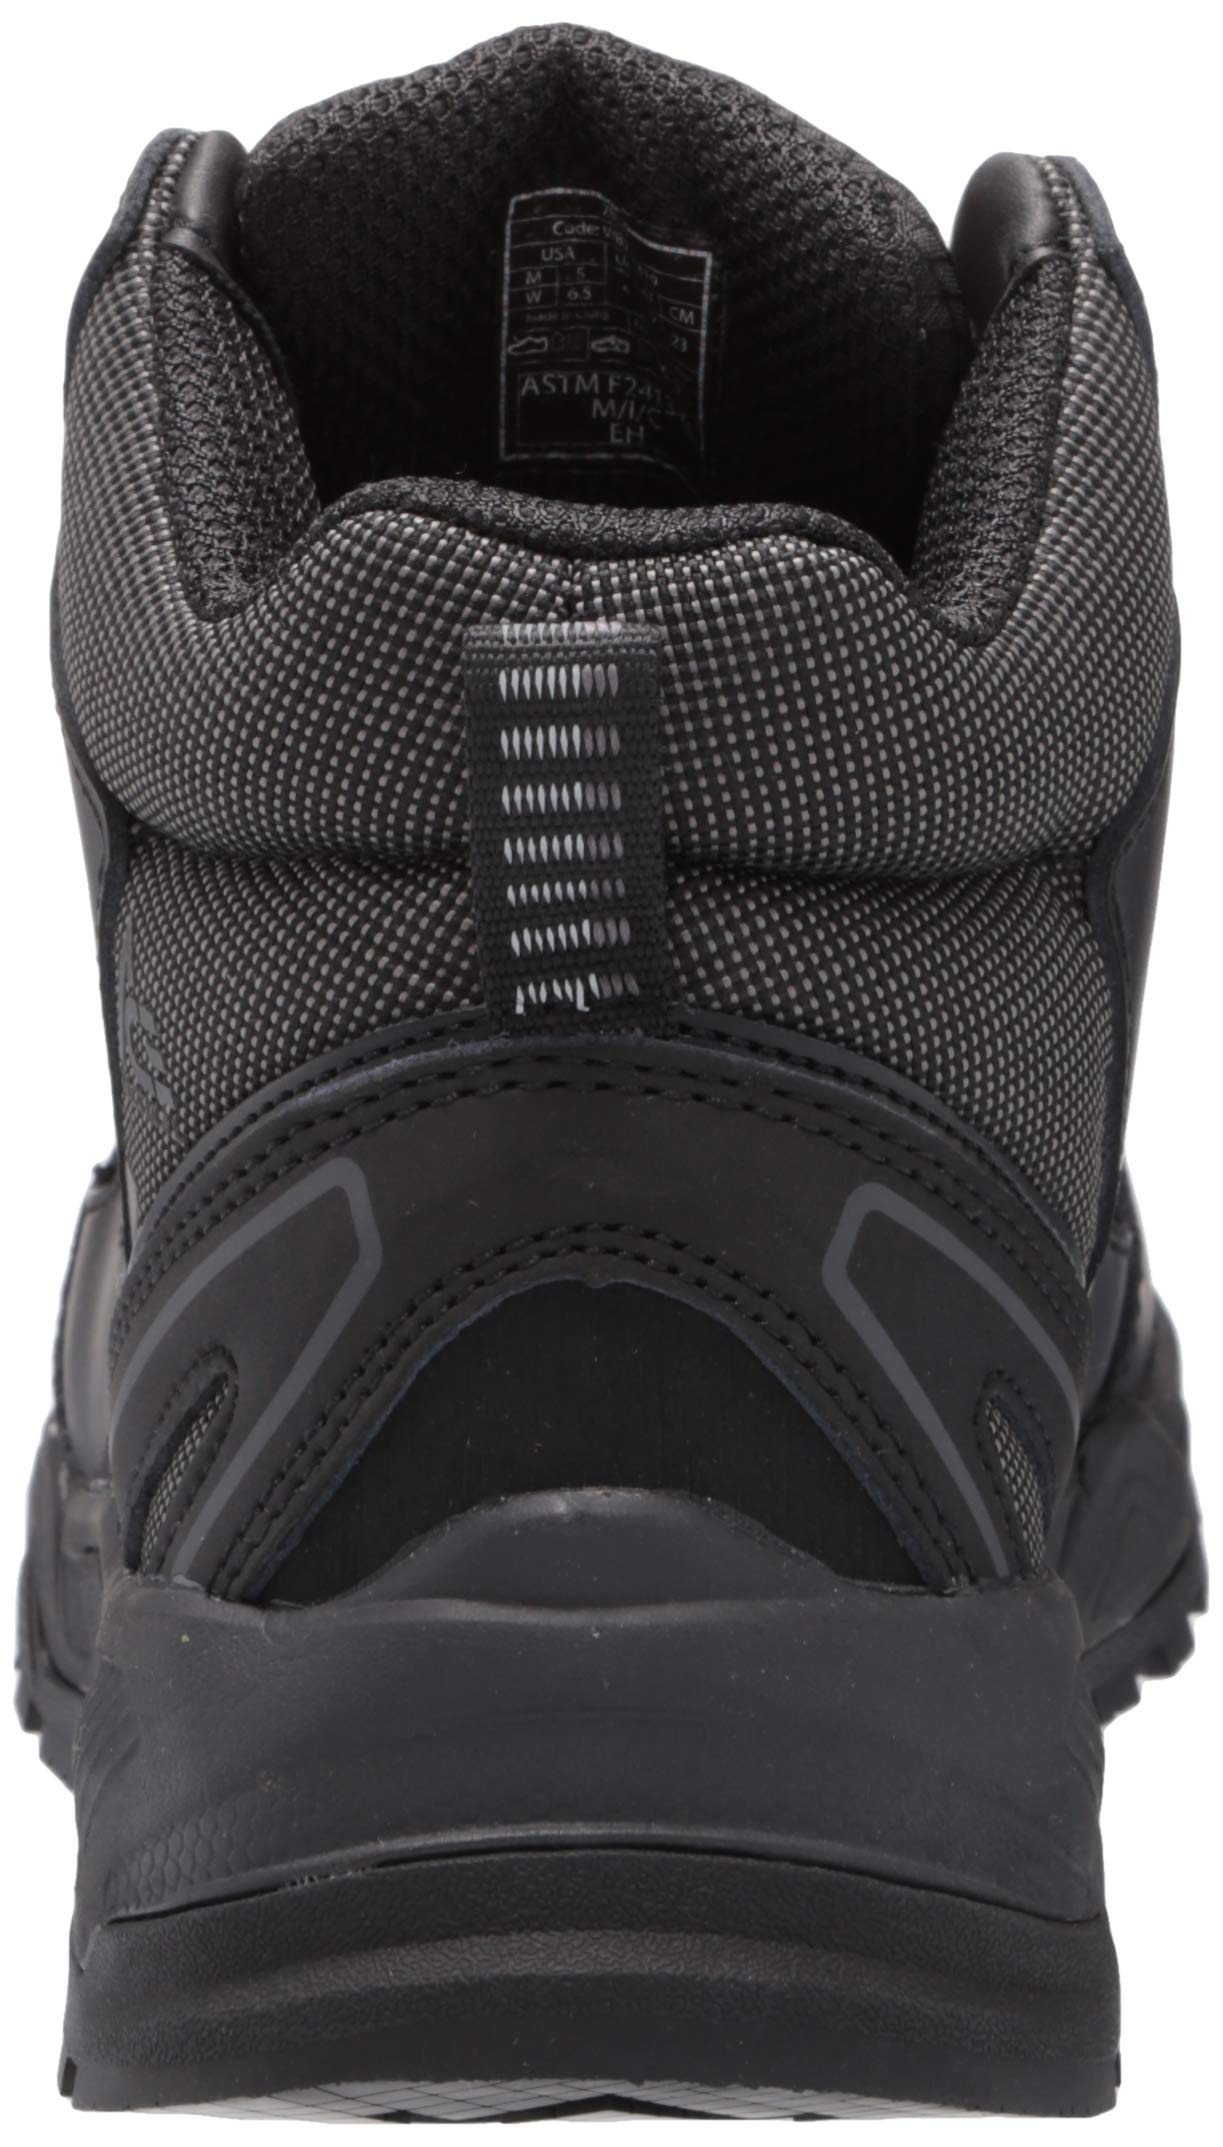 Shoes for Crews Defender Mid, Men's, Women's, Unisex Soft Toe (ST) and Nano Composite Toe (NCT) Work Shoes, Slip Resistant, Water Resistant, Black